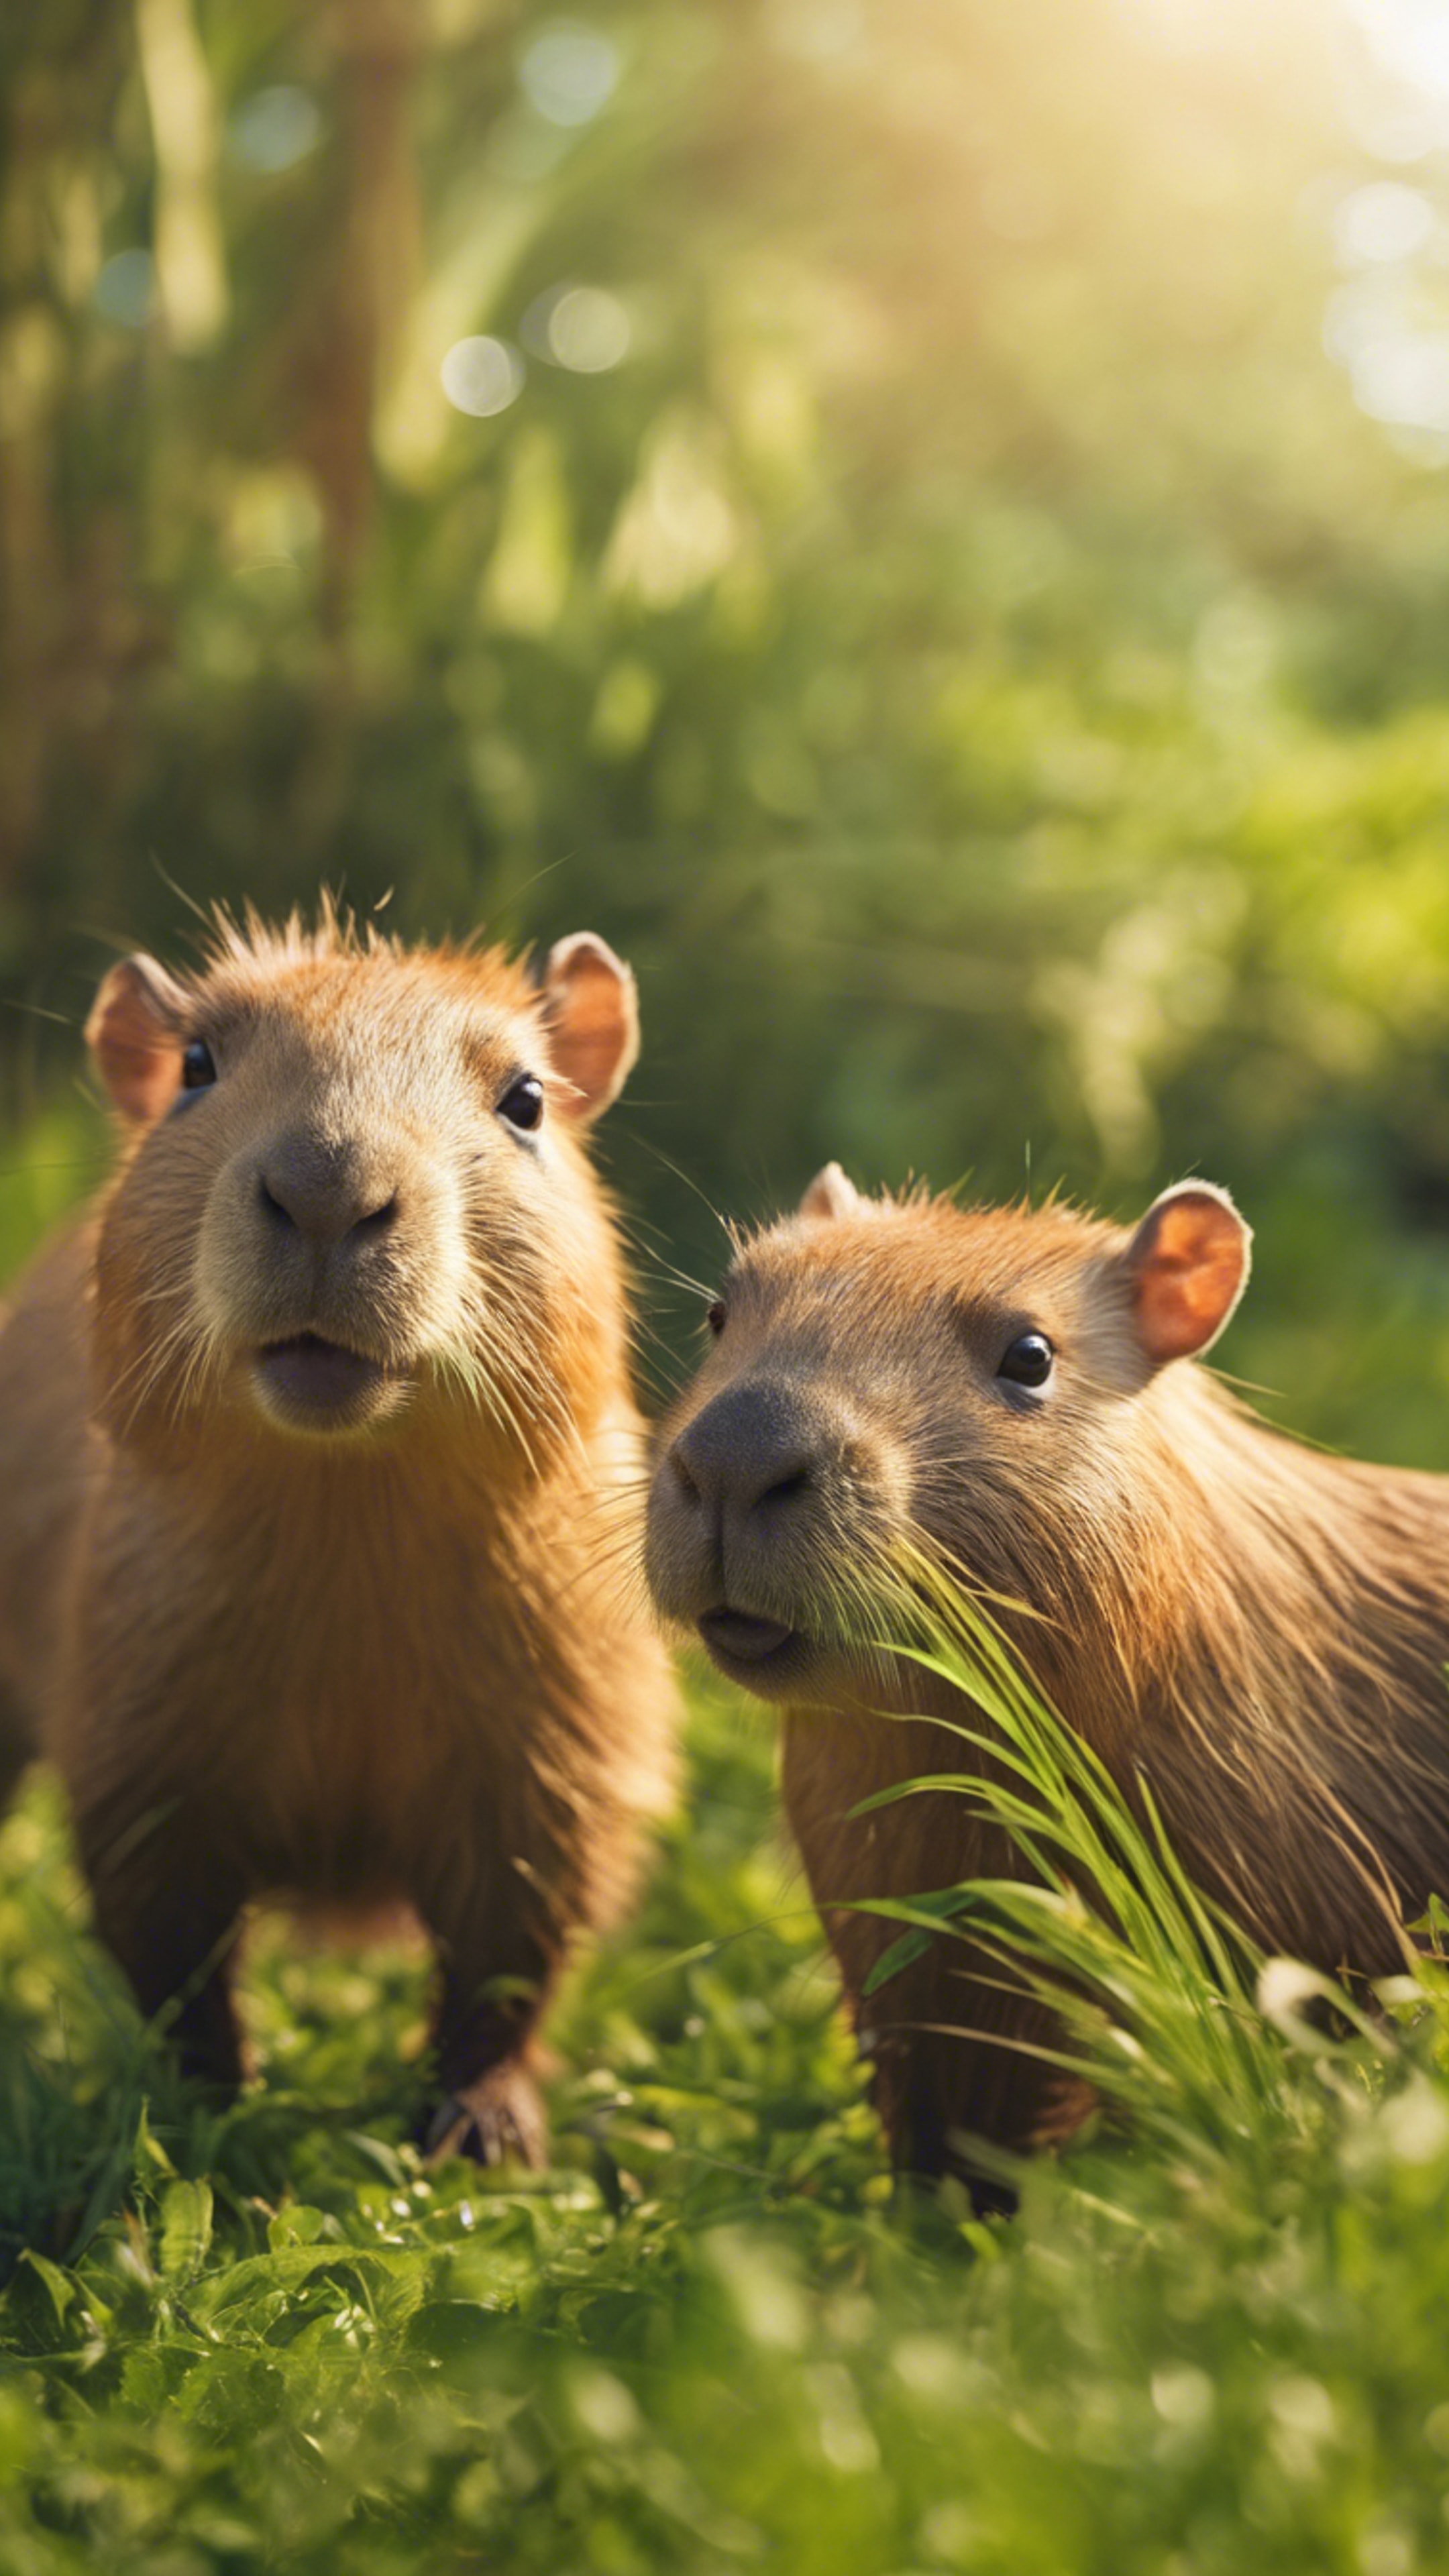 A group of playful capybara kids in a lush green meadow under the warm sunlight. Tapet[941f99d4da544970bae4]